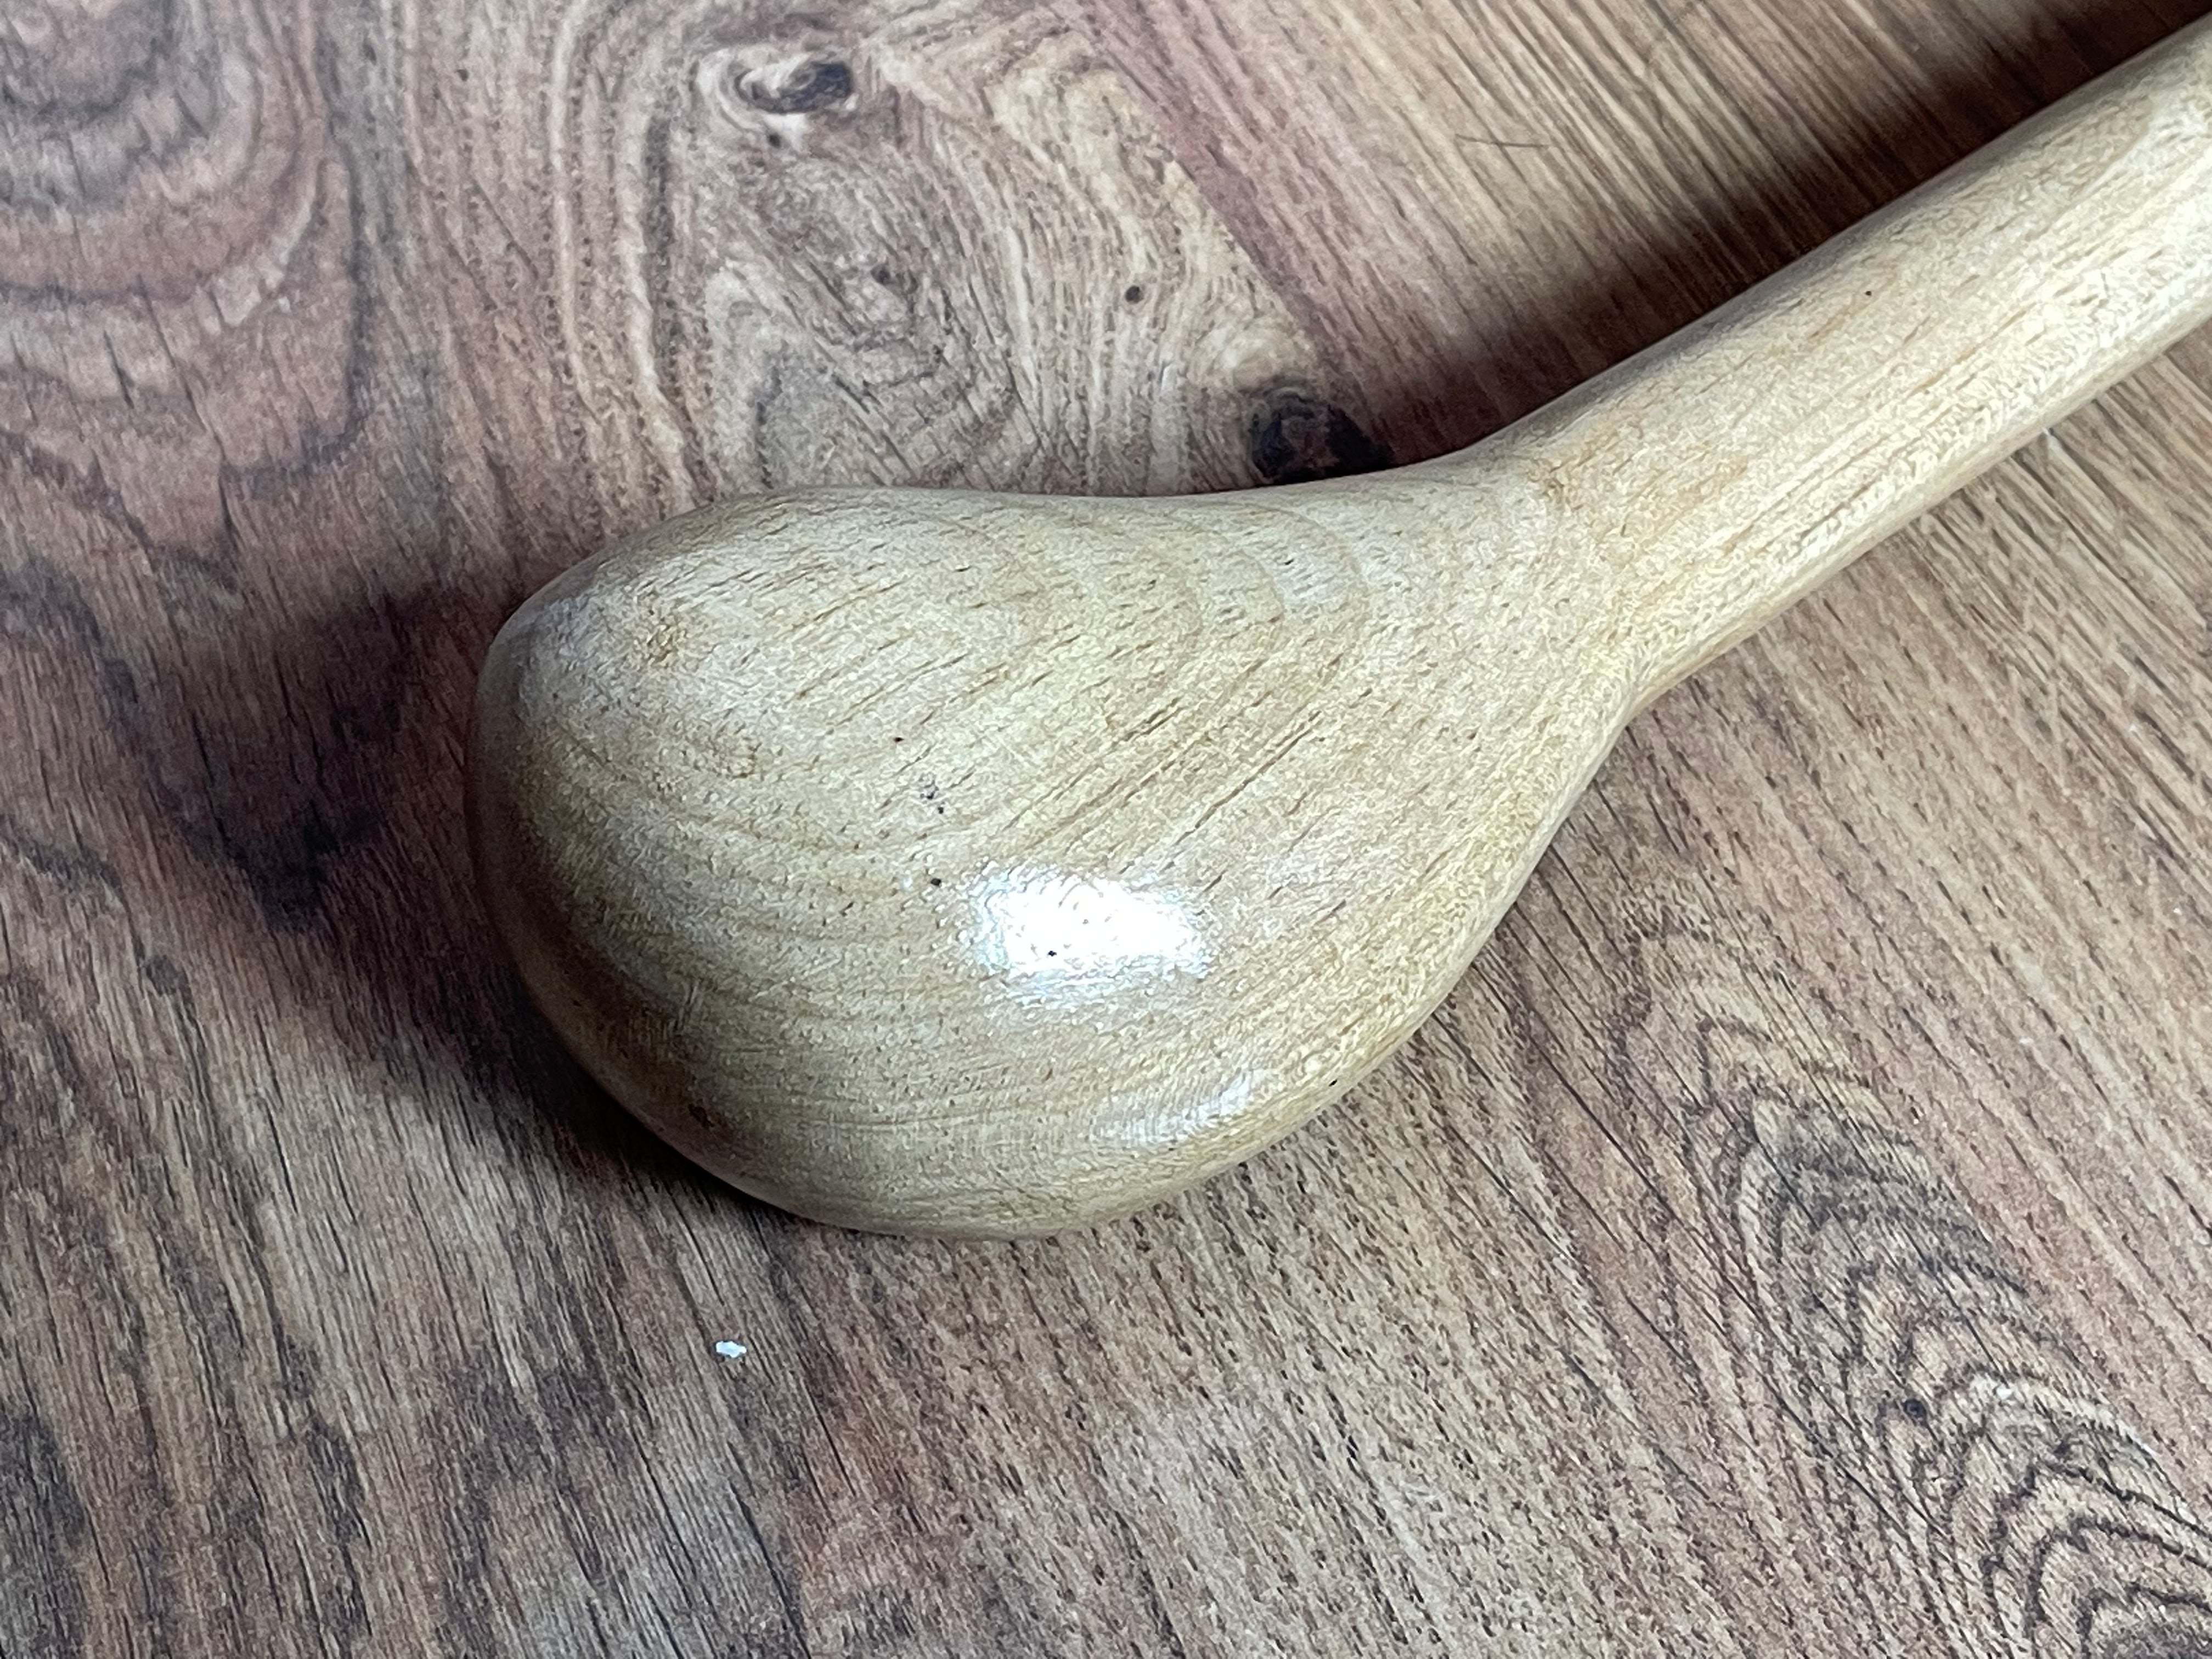 Irish Oak Walking Stick - 35 1/2 inch